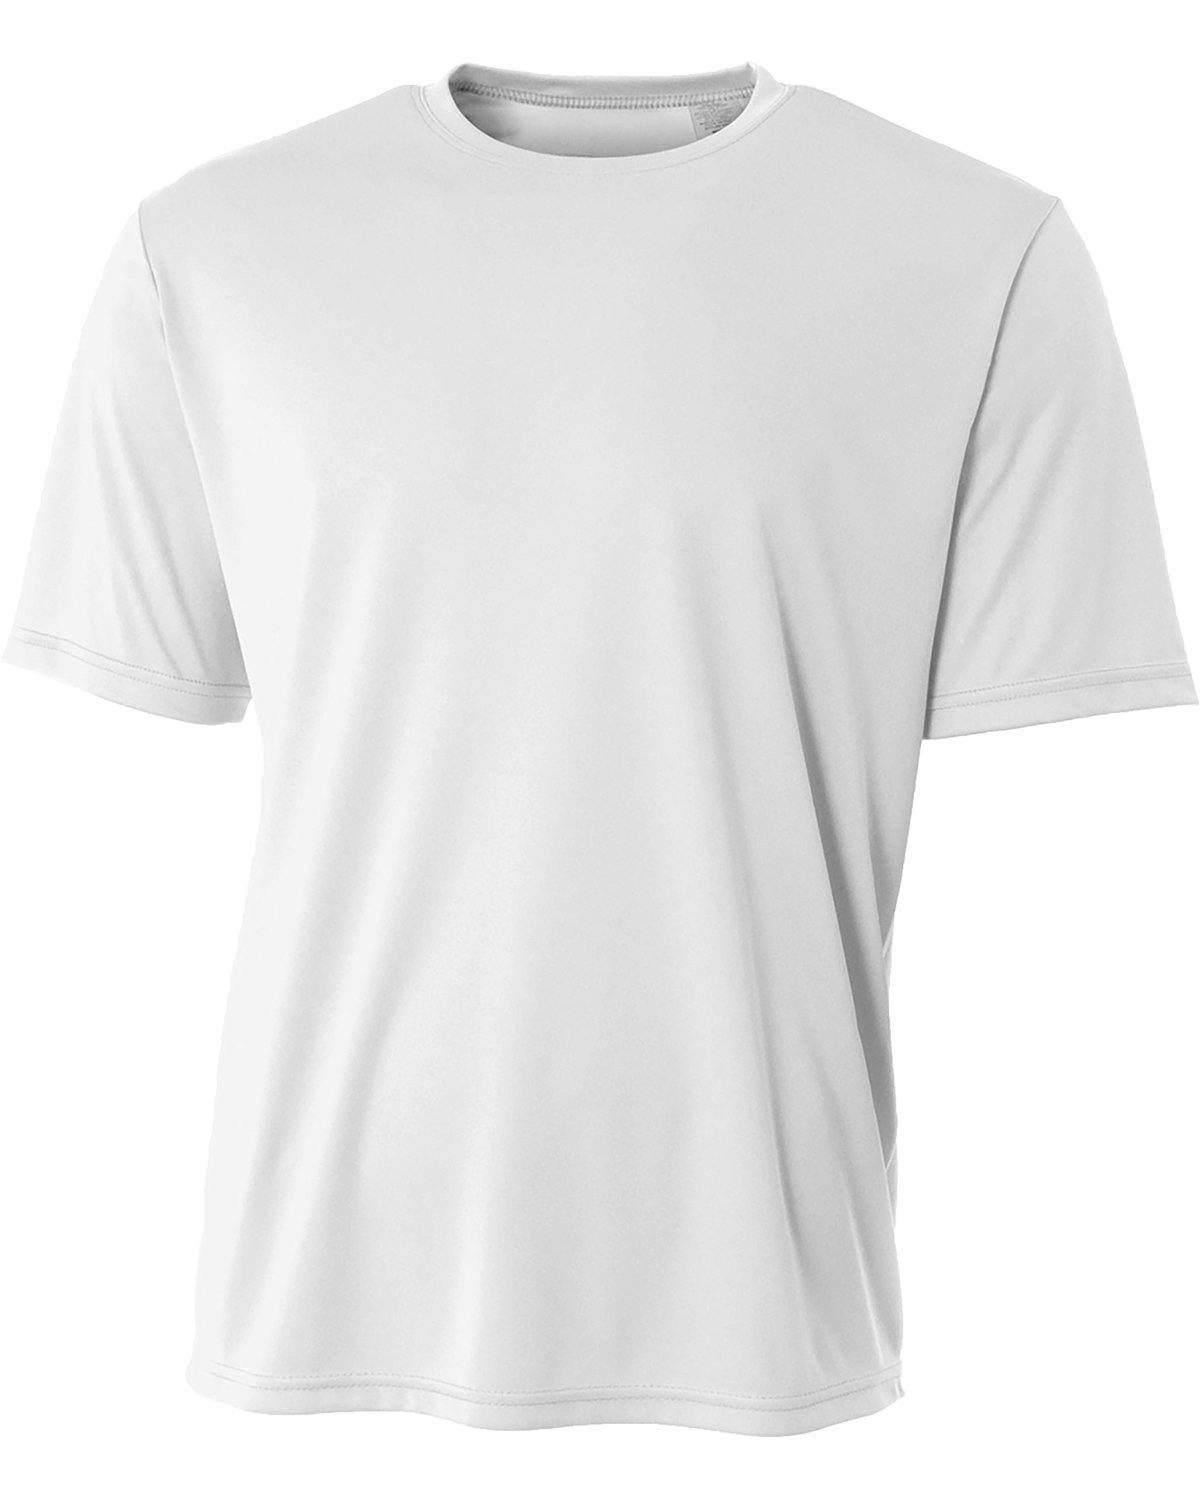 Image for Men's Sprint Performance T-Shirt